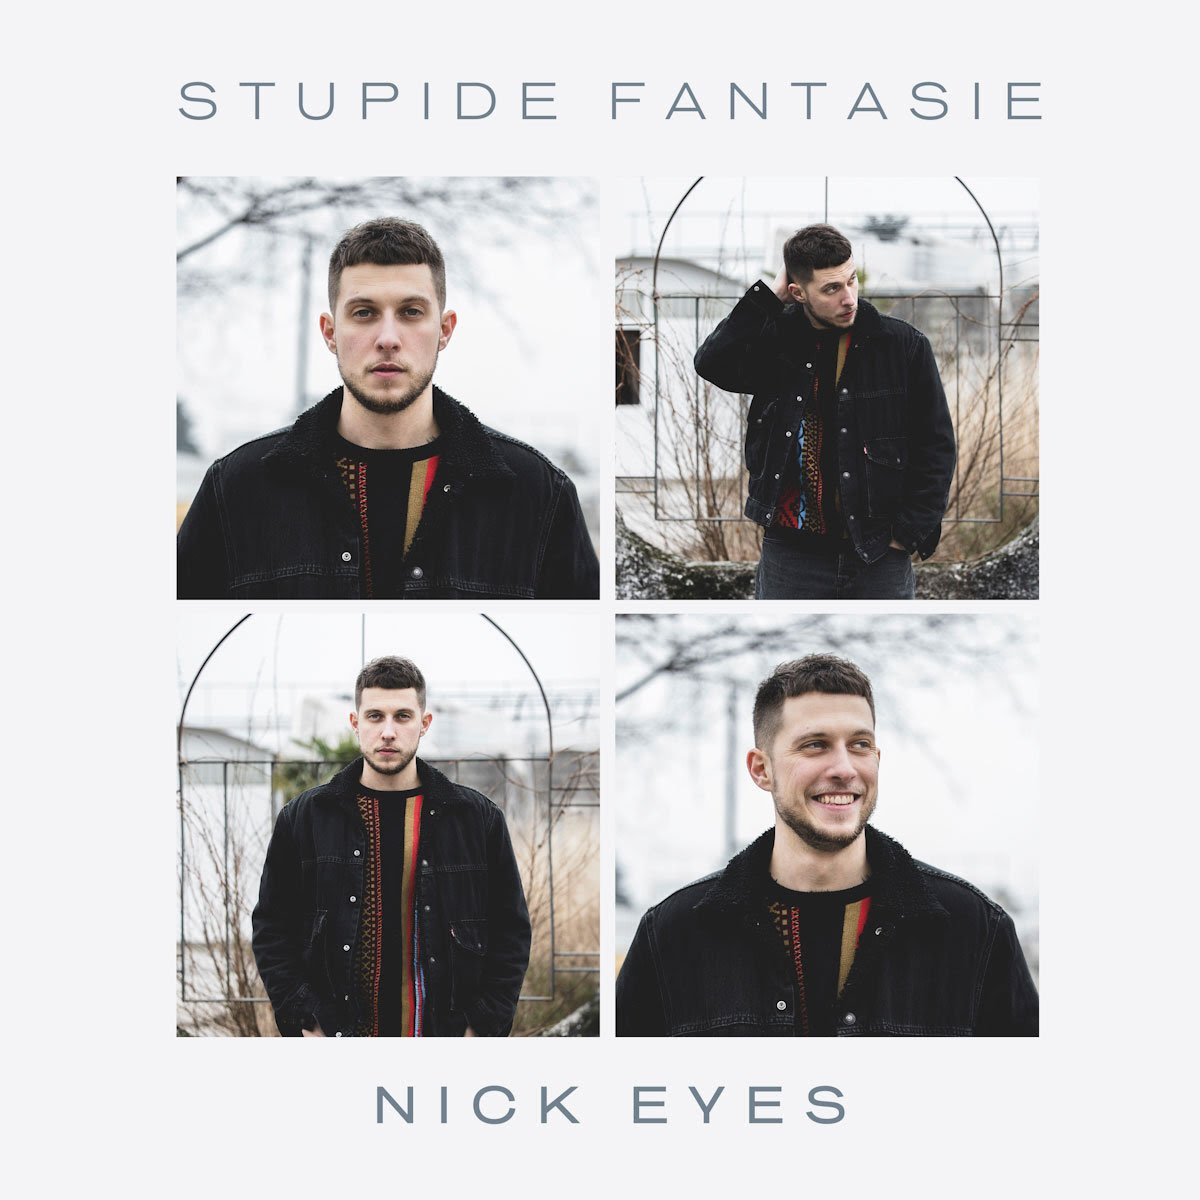 NICK EYES: venerdì 5 aprile esce in radio “STUPIDE FANTASIE” il nuovo singolo